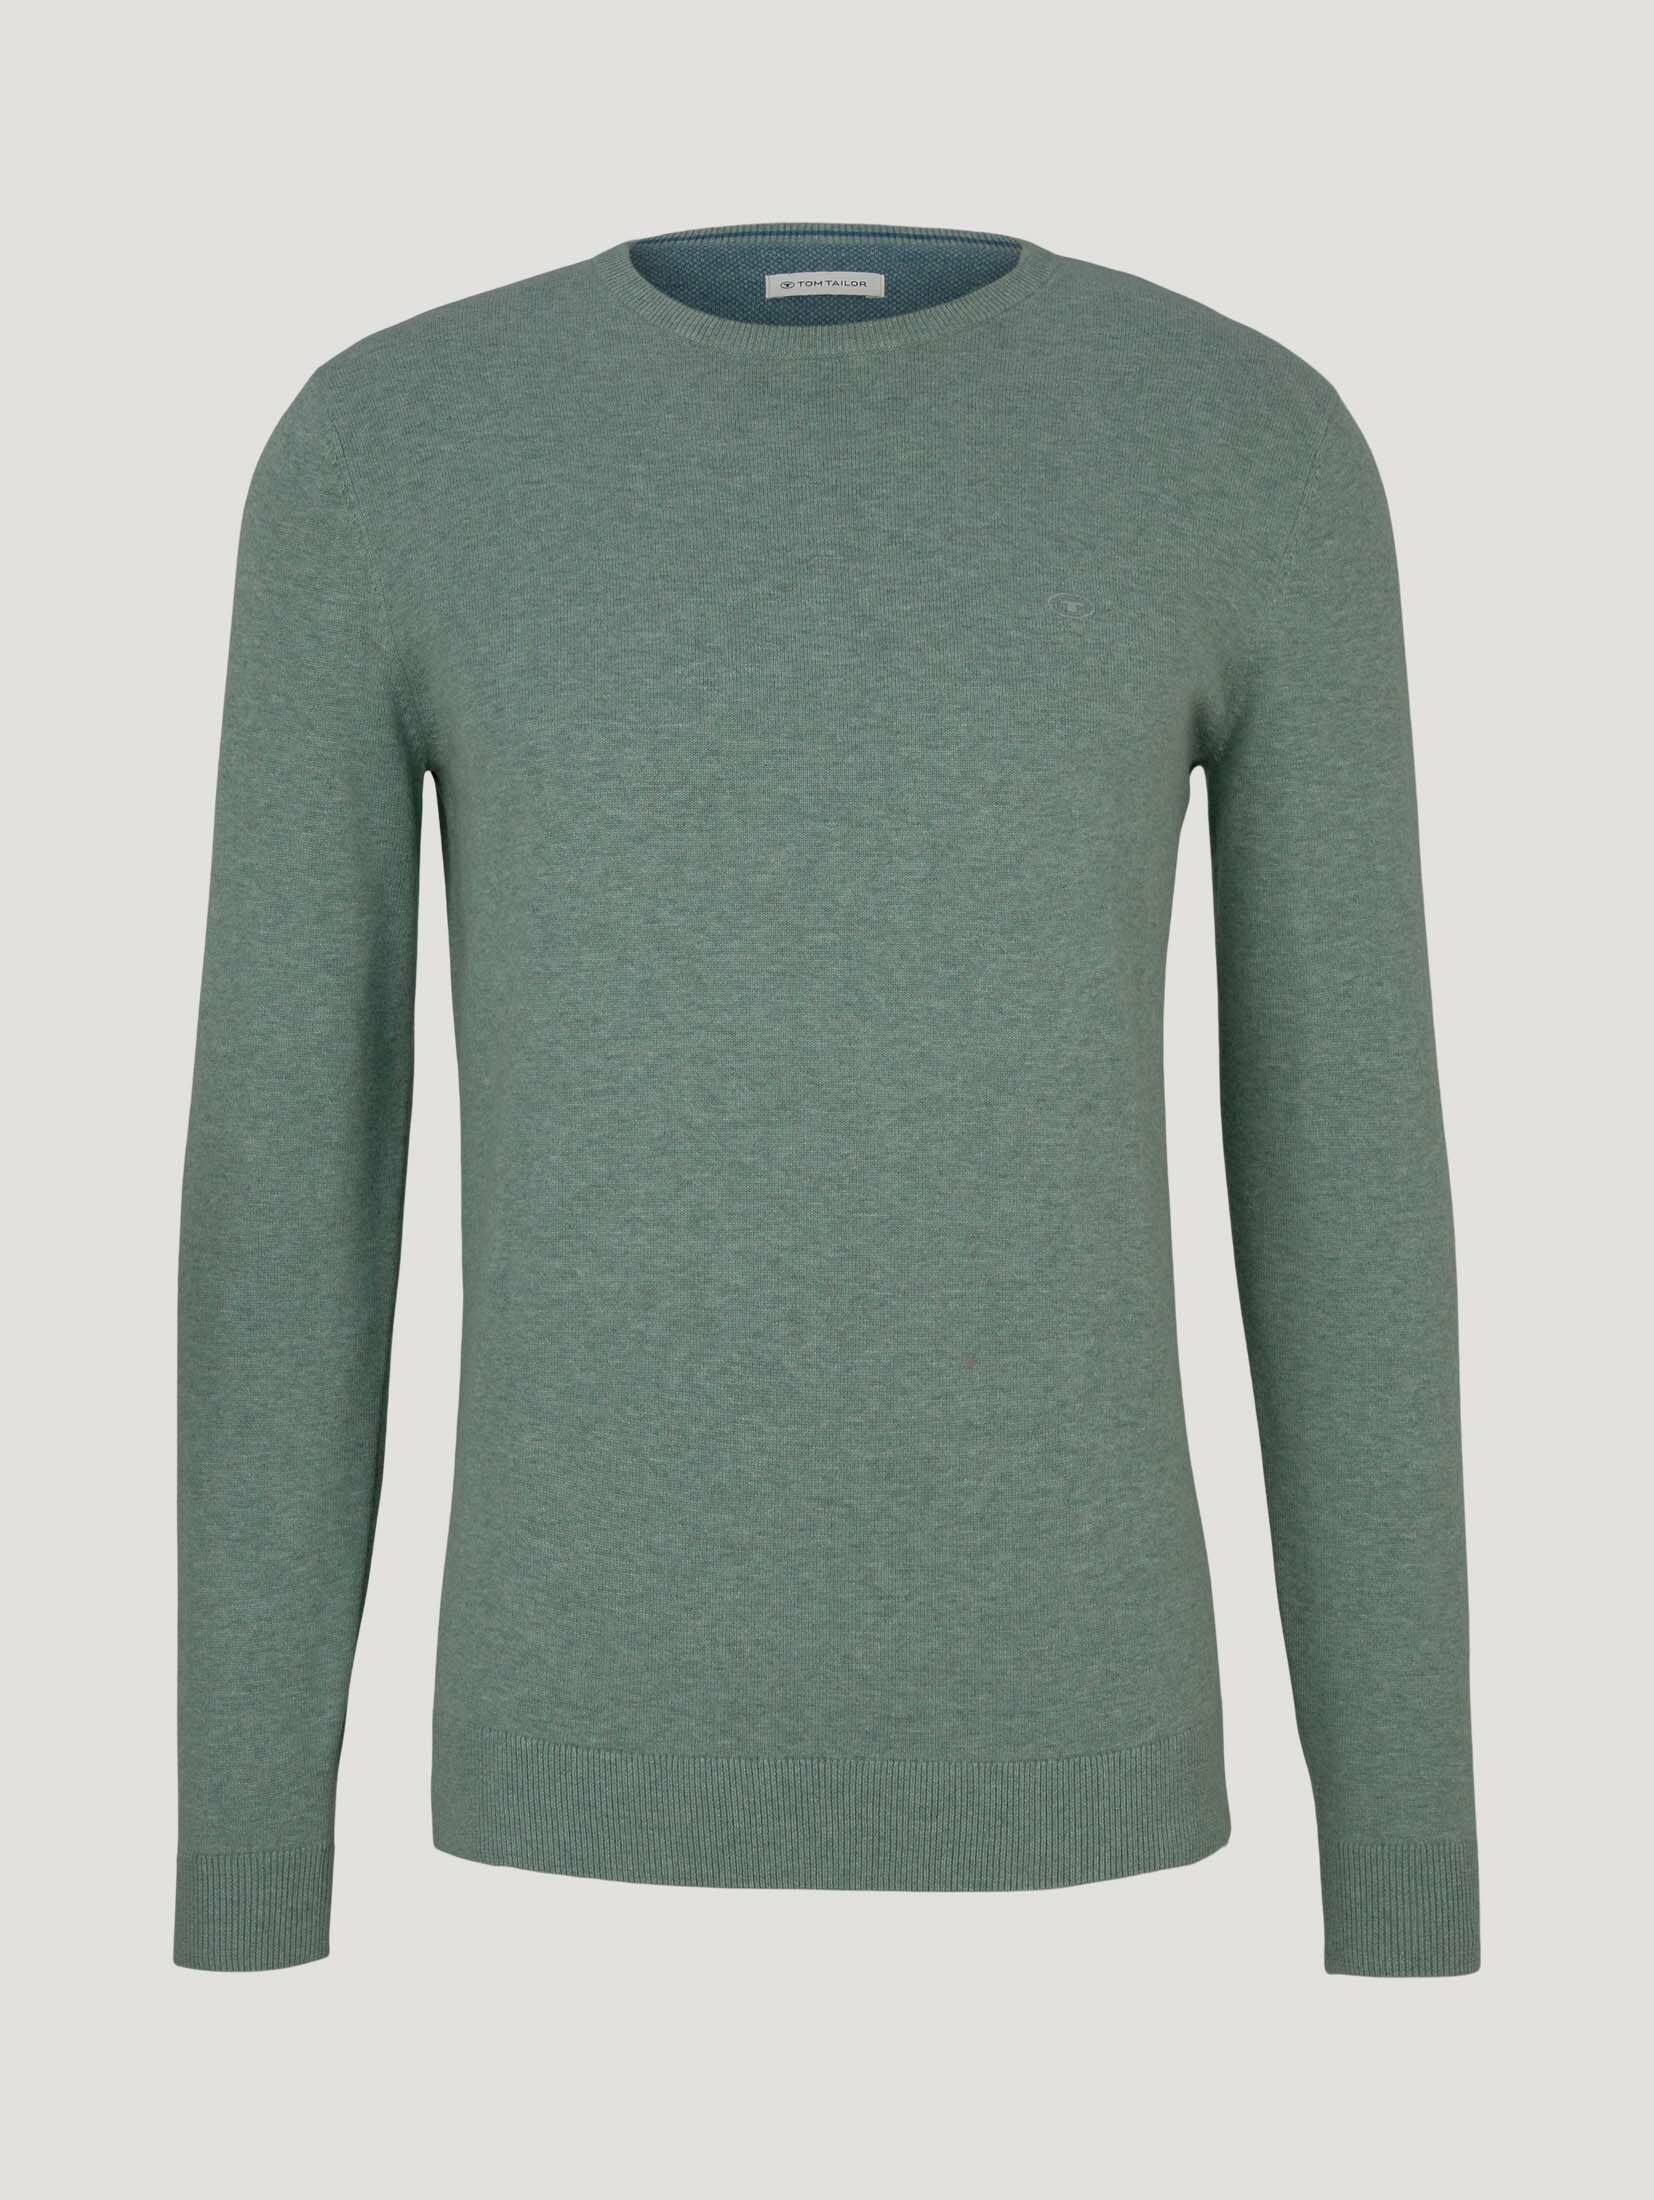 Пуловер Tom Tailor Tom Tailor Strick, зеленый пуловер tom tailor strick красный